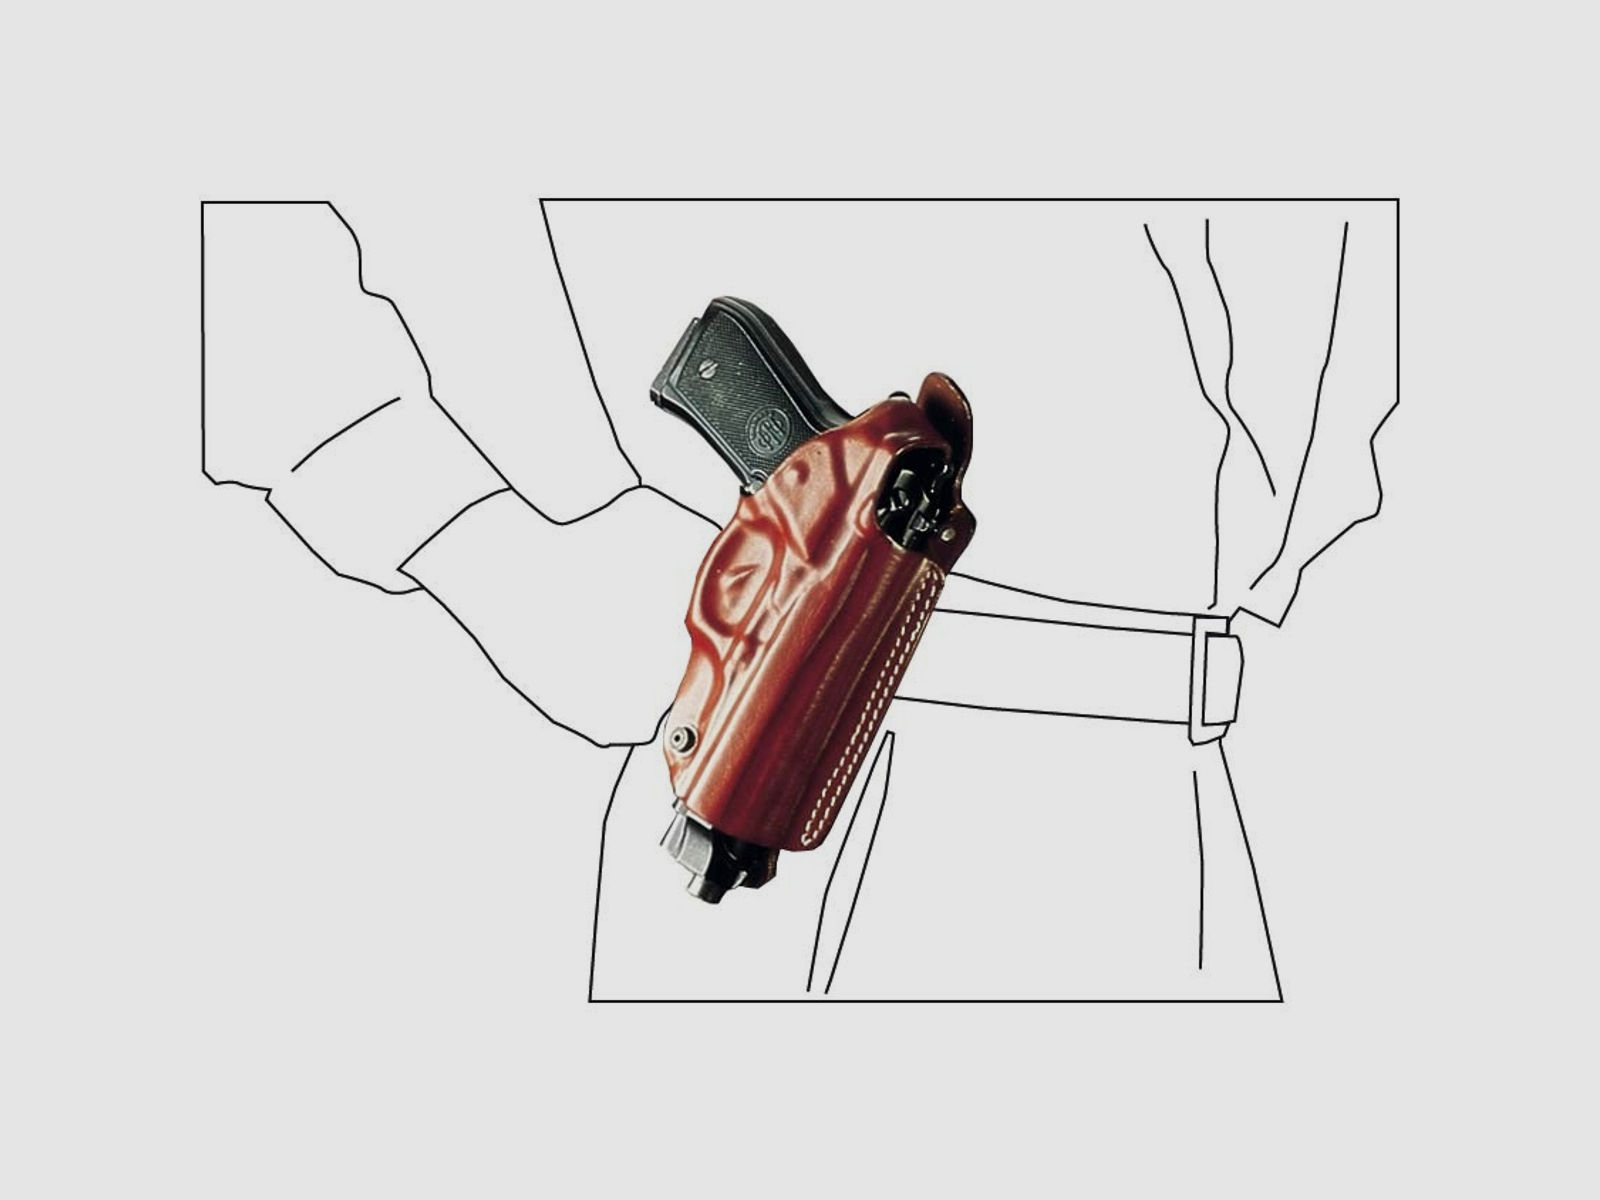 Mehrzweck-Schulterholster/Gürtelholster "Miami" Glock 20/21,  H&K USP, P30L, SFP9-VP9, CZ P07-Braun-Linkshänder